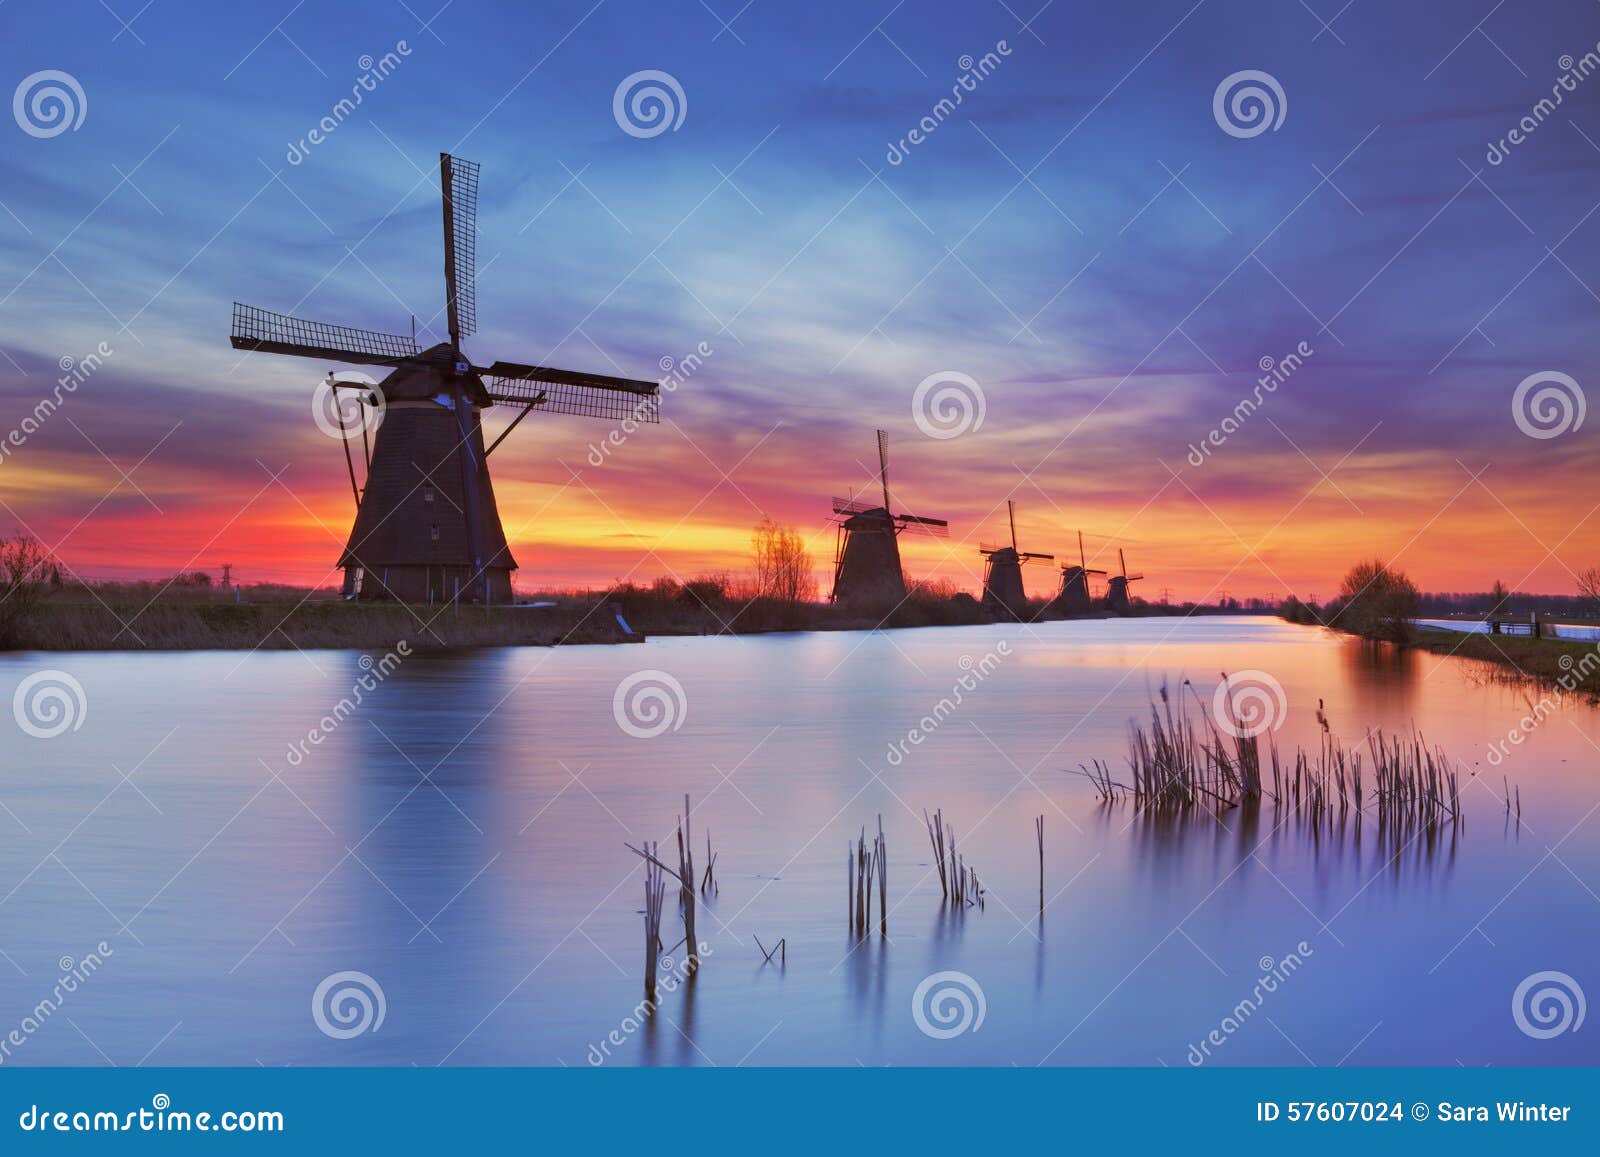 traditional windmills at sunrise, kinderdijk, the netherlands